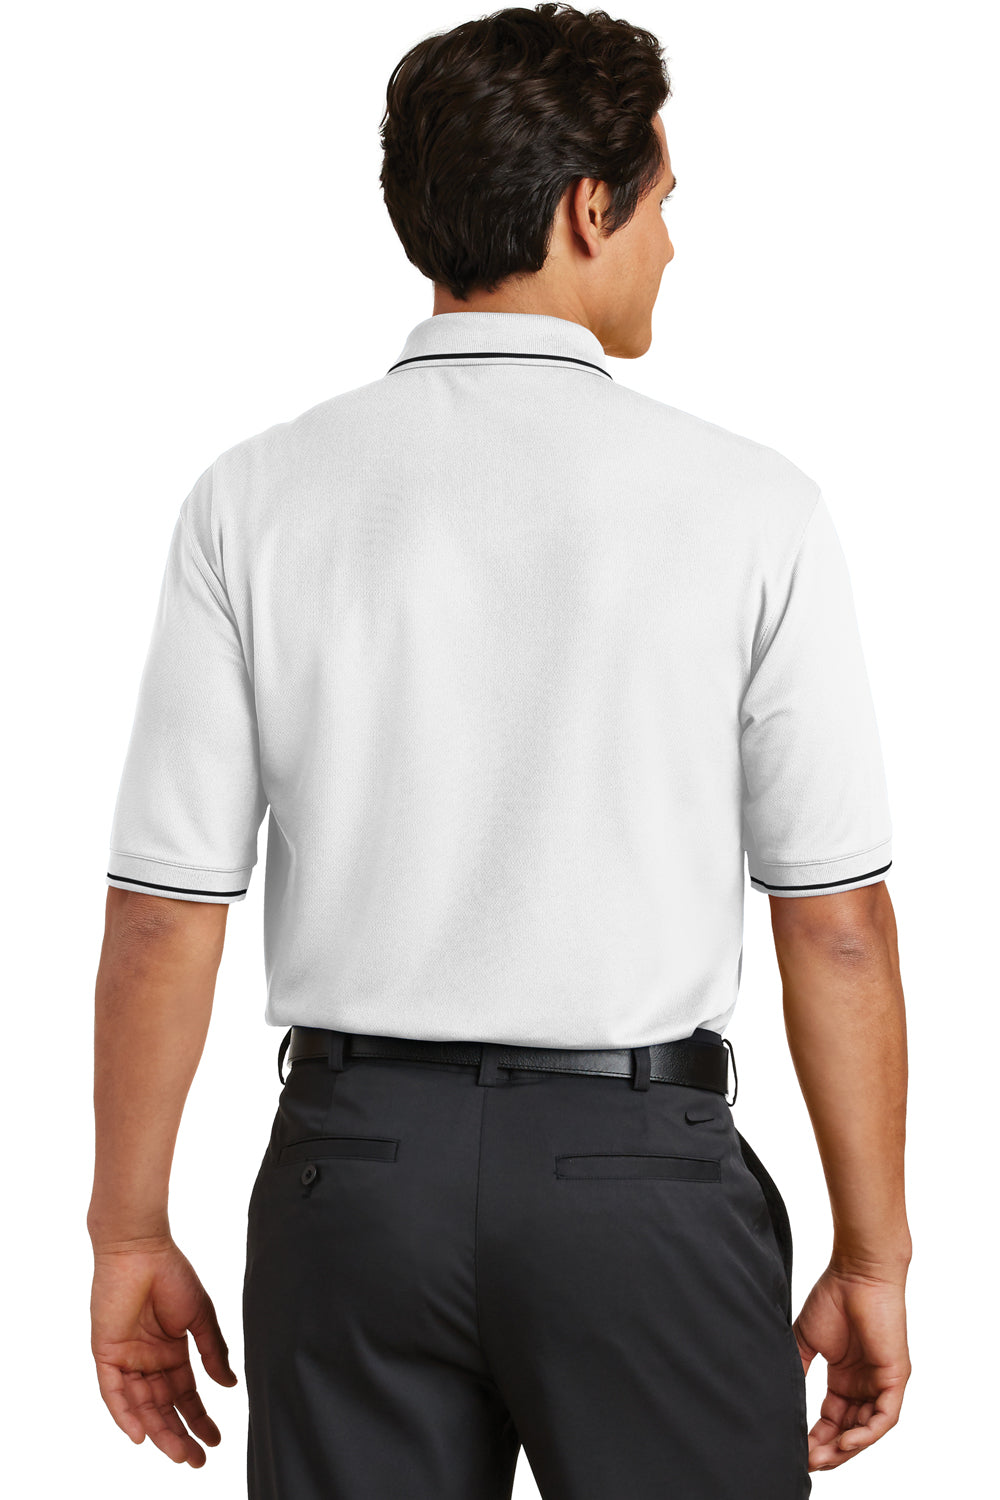 Nike 319966 Mens Classic Dri-Fit Moisture Wicking Short Sleeve Polo Shirt White Back